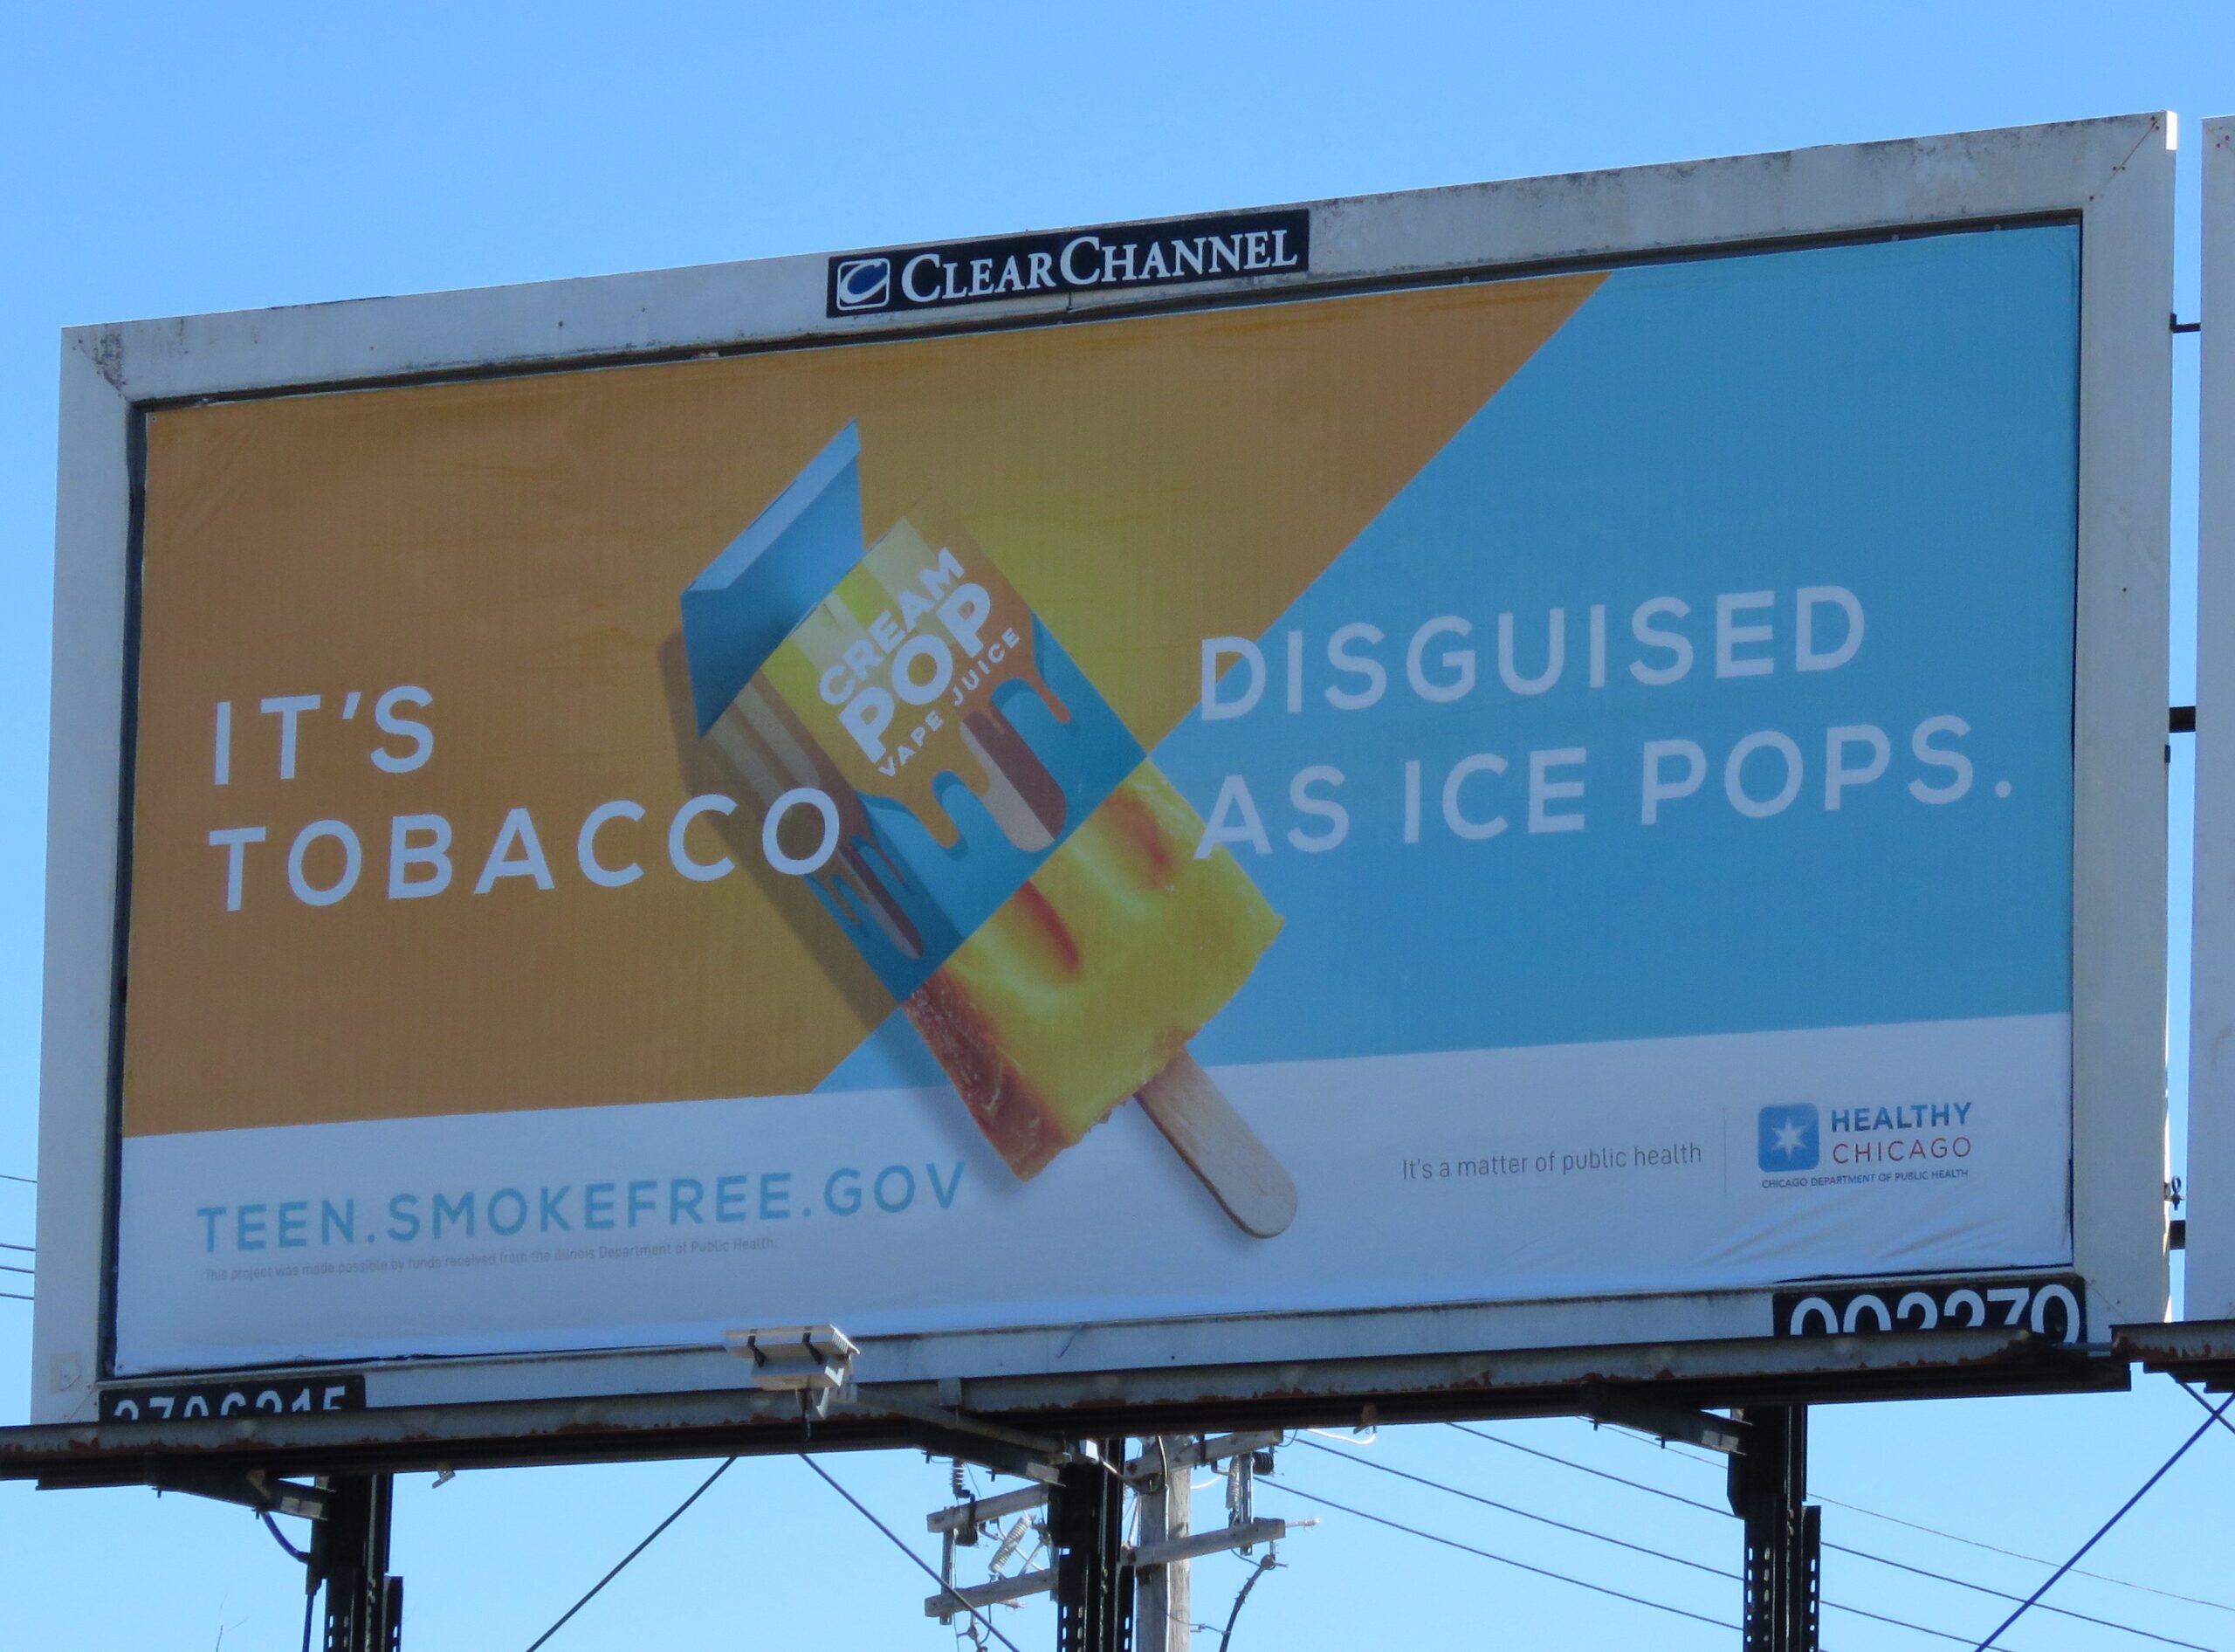 Smoking Green Bay Packers Bank Billboard Creating Community Danger - OOH  TODAY